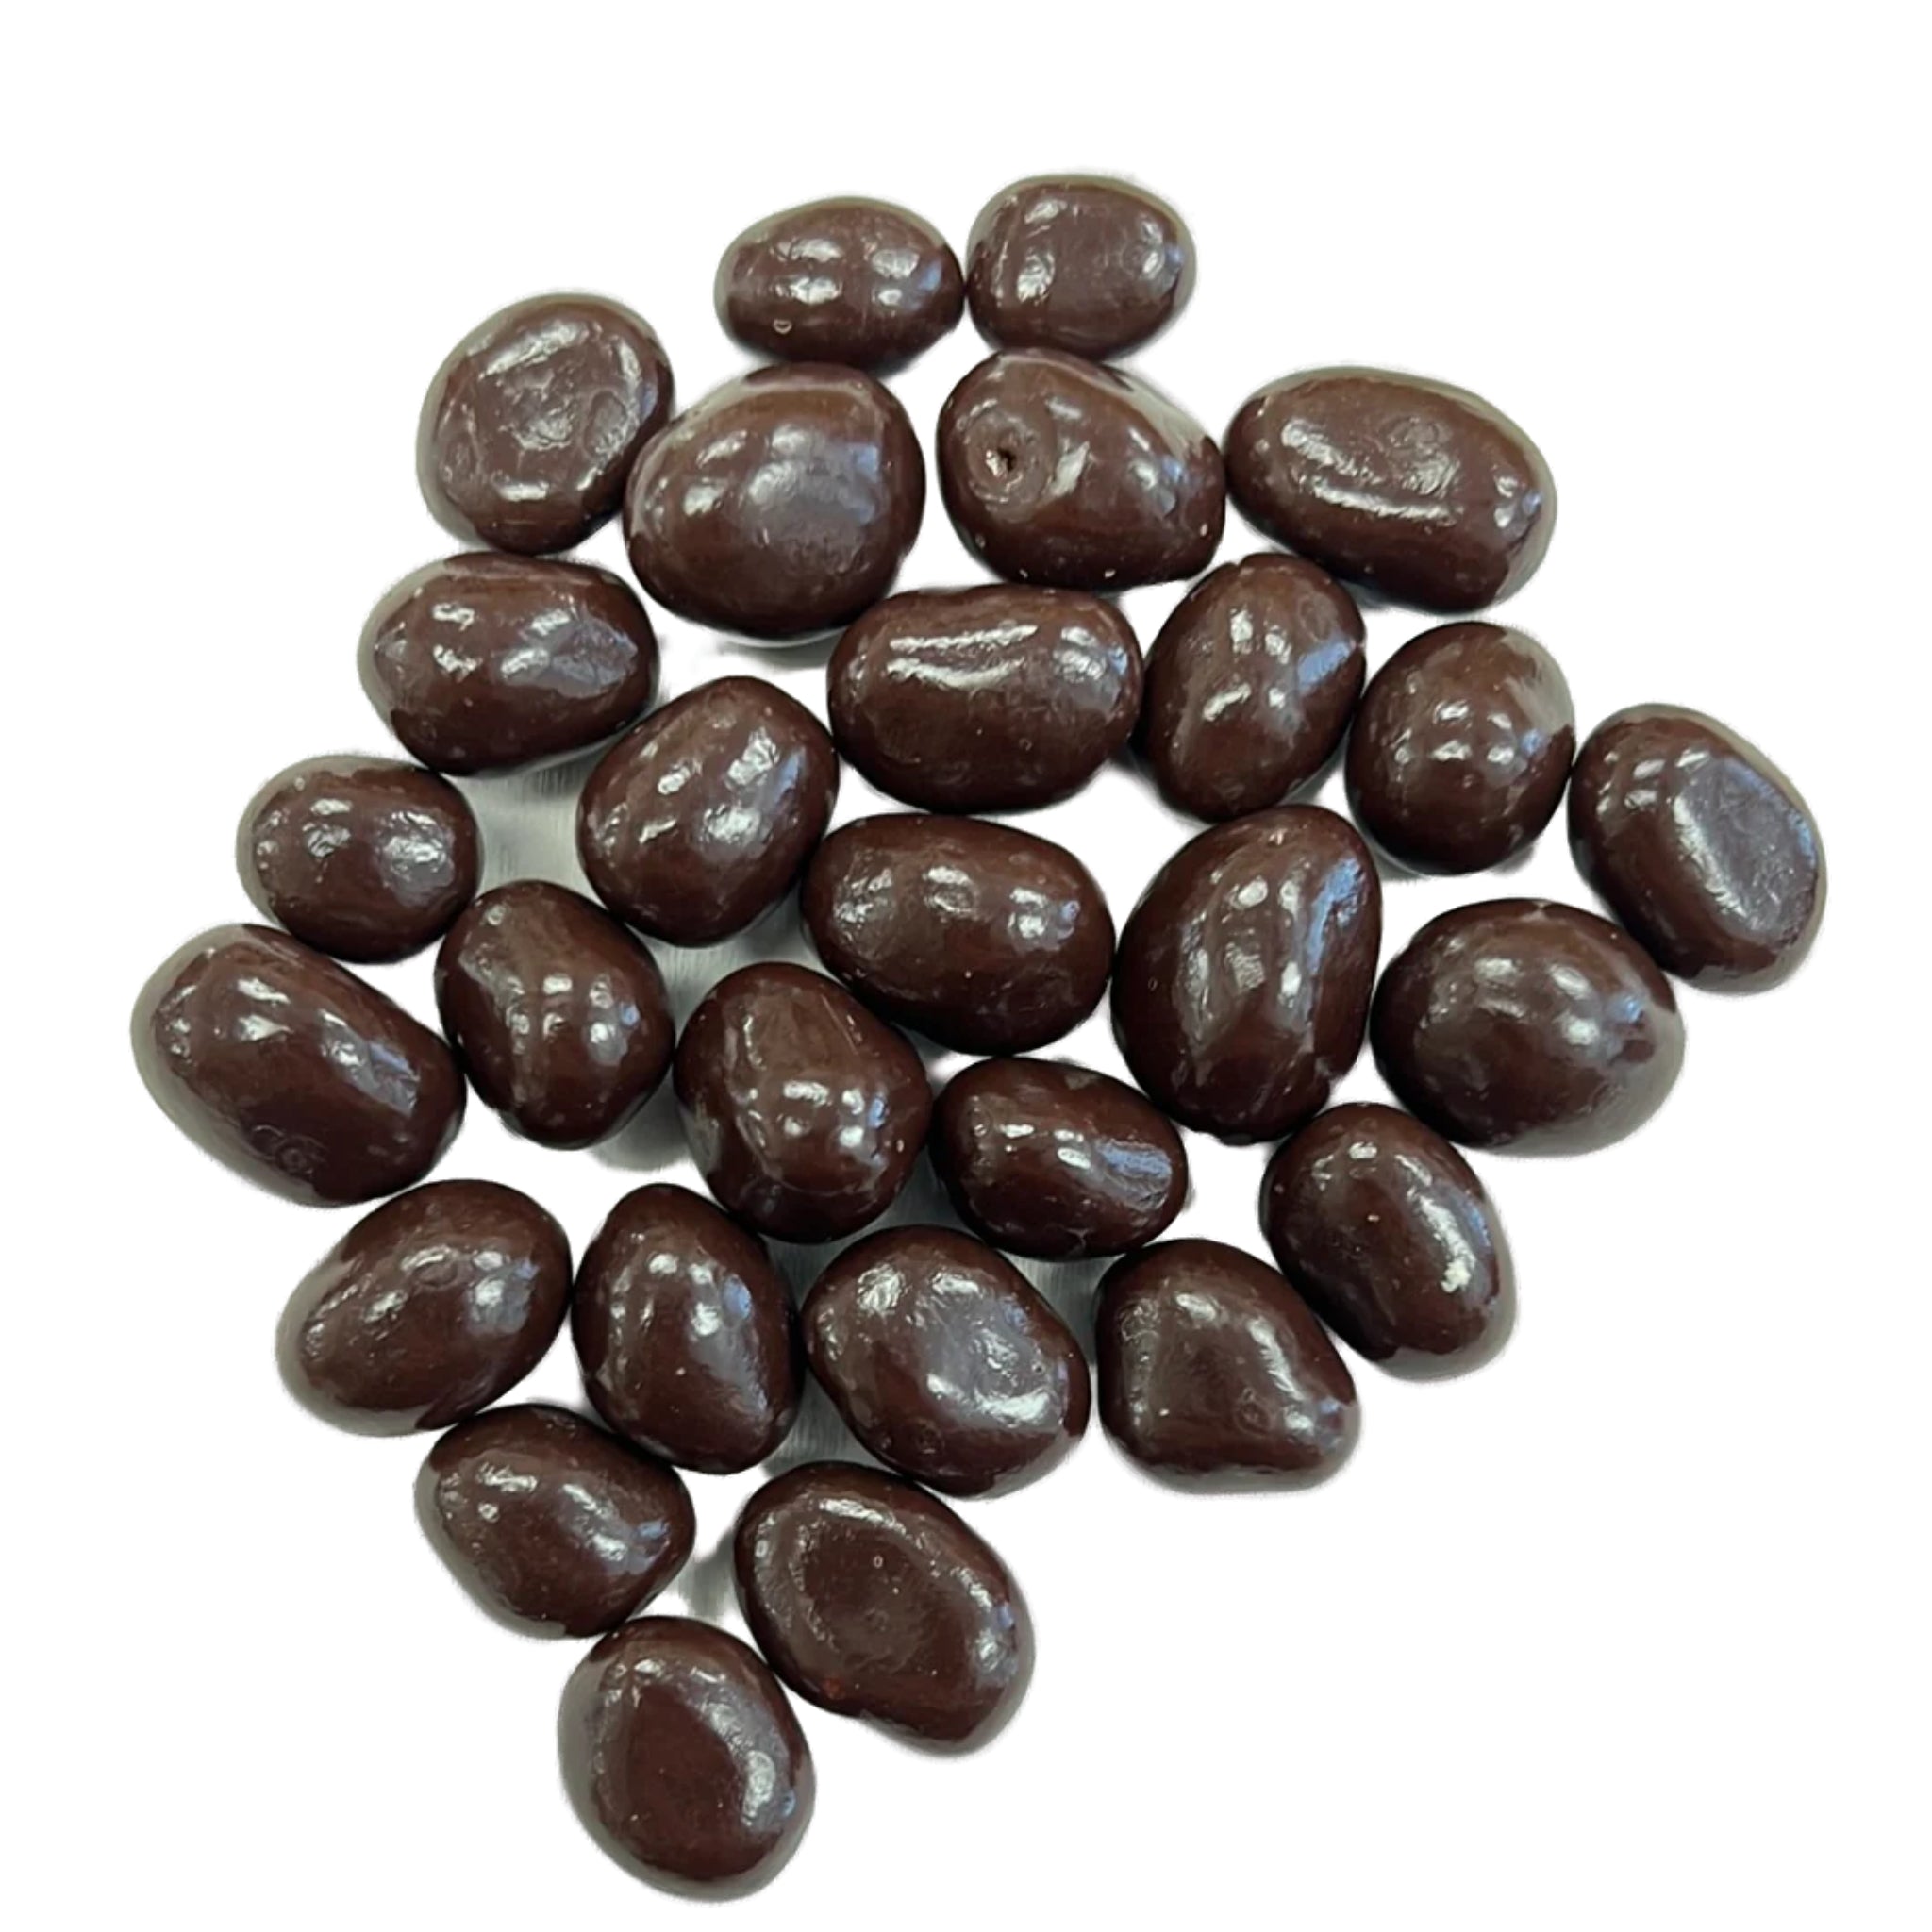 Small pistachio size bites covered in dark chocolate 